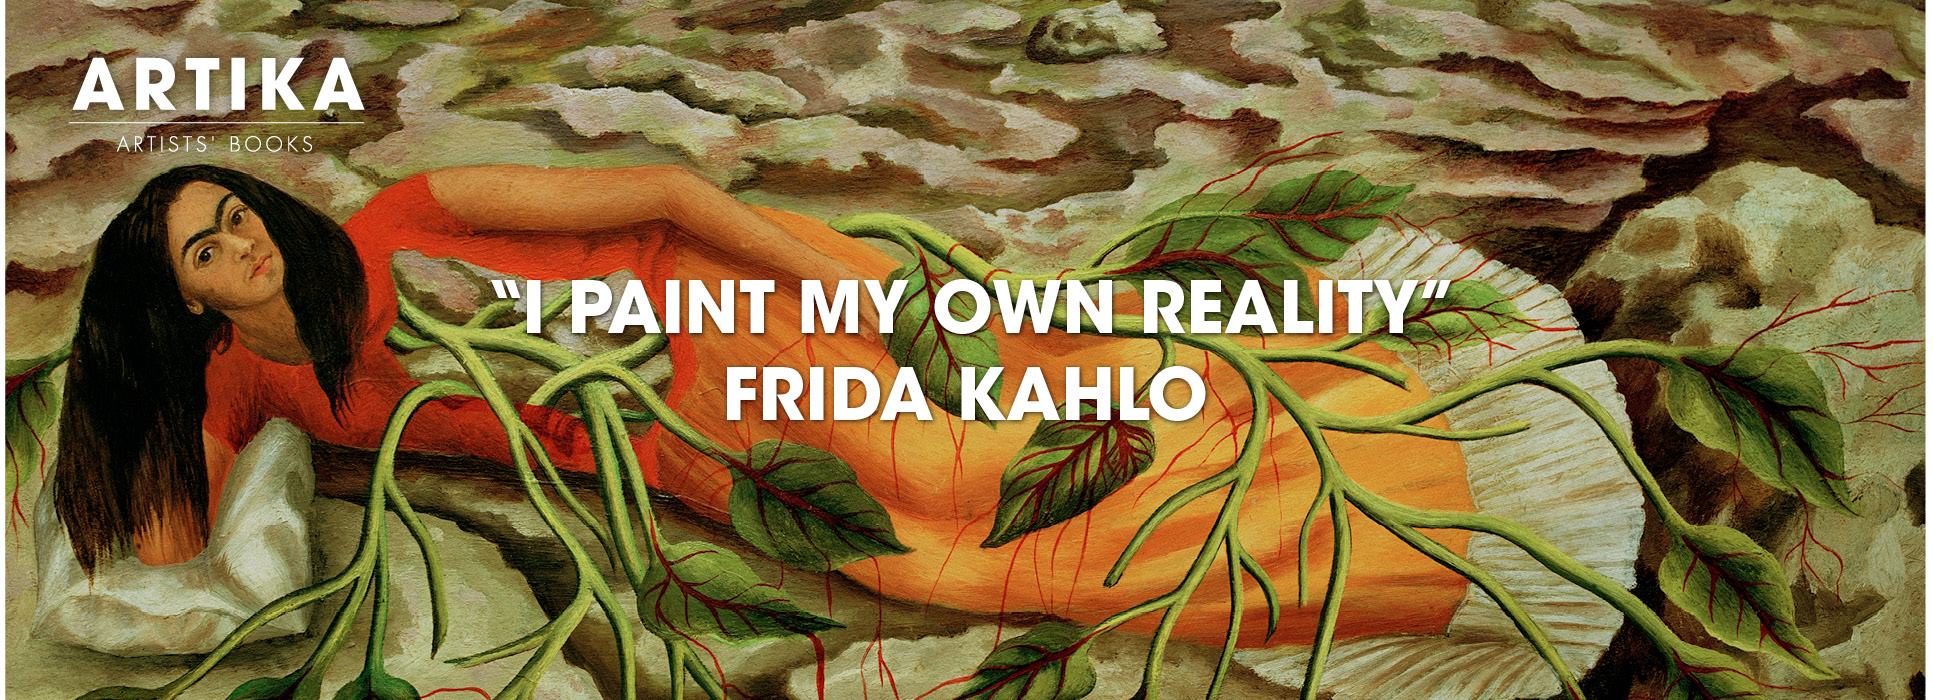 The dreams of Frida Kahlo -ARTIKA